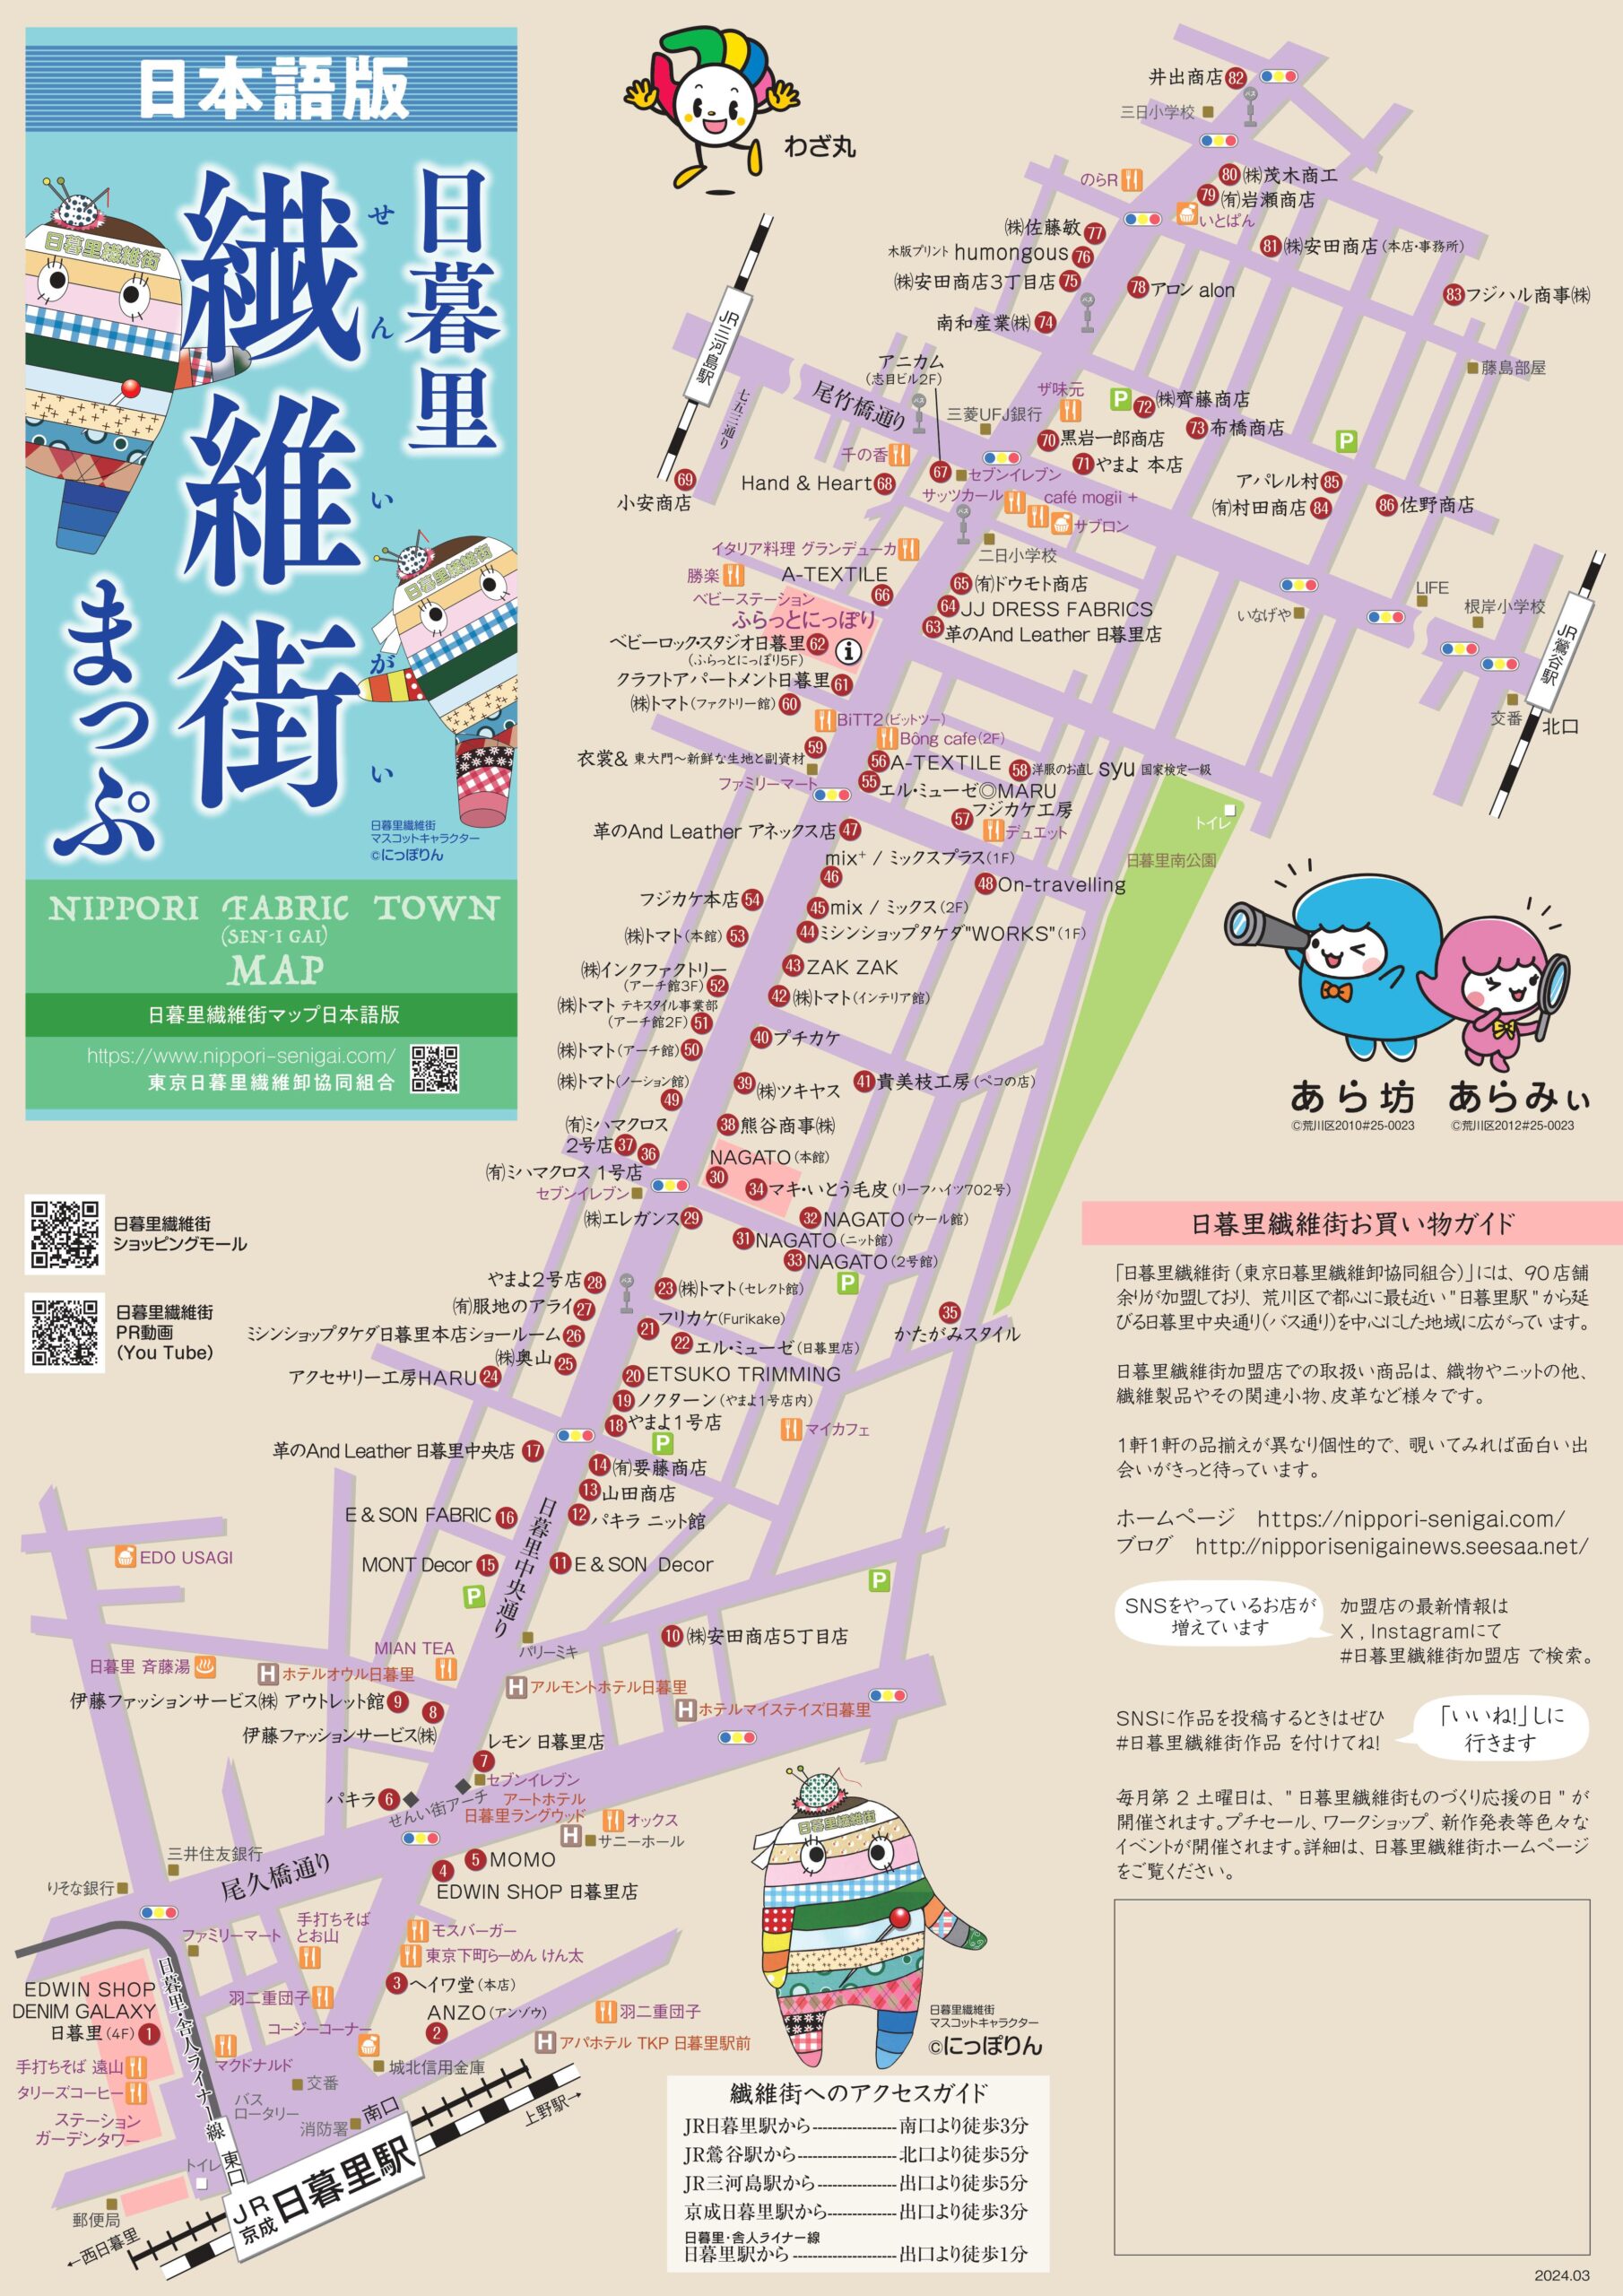 日暮里繊維街マップ　日本語版 表面